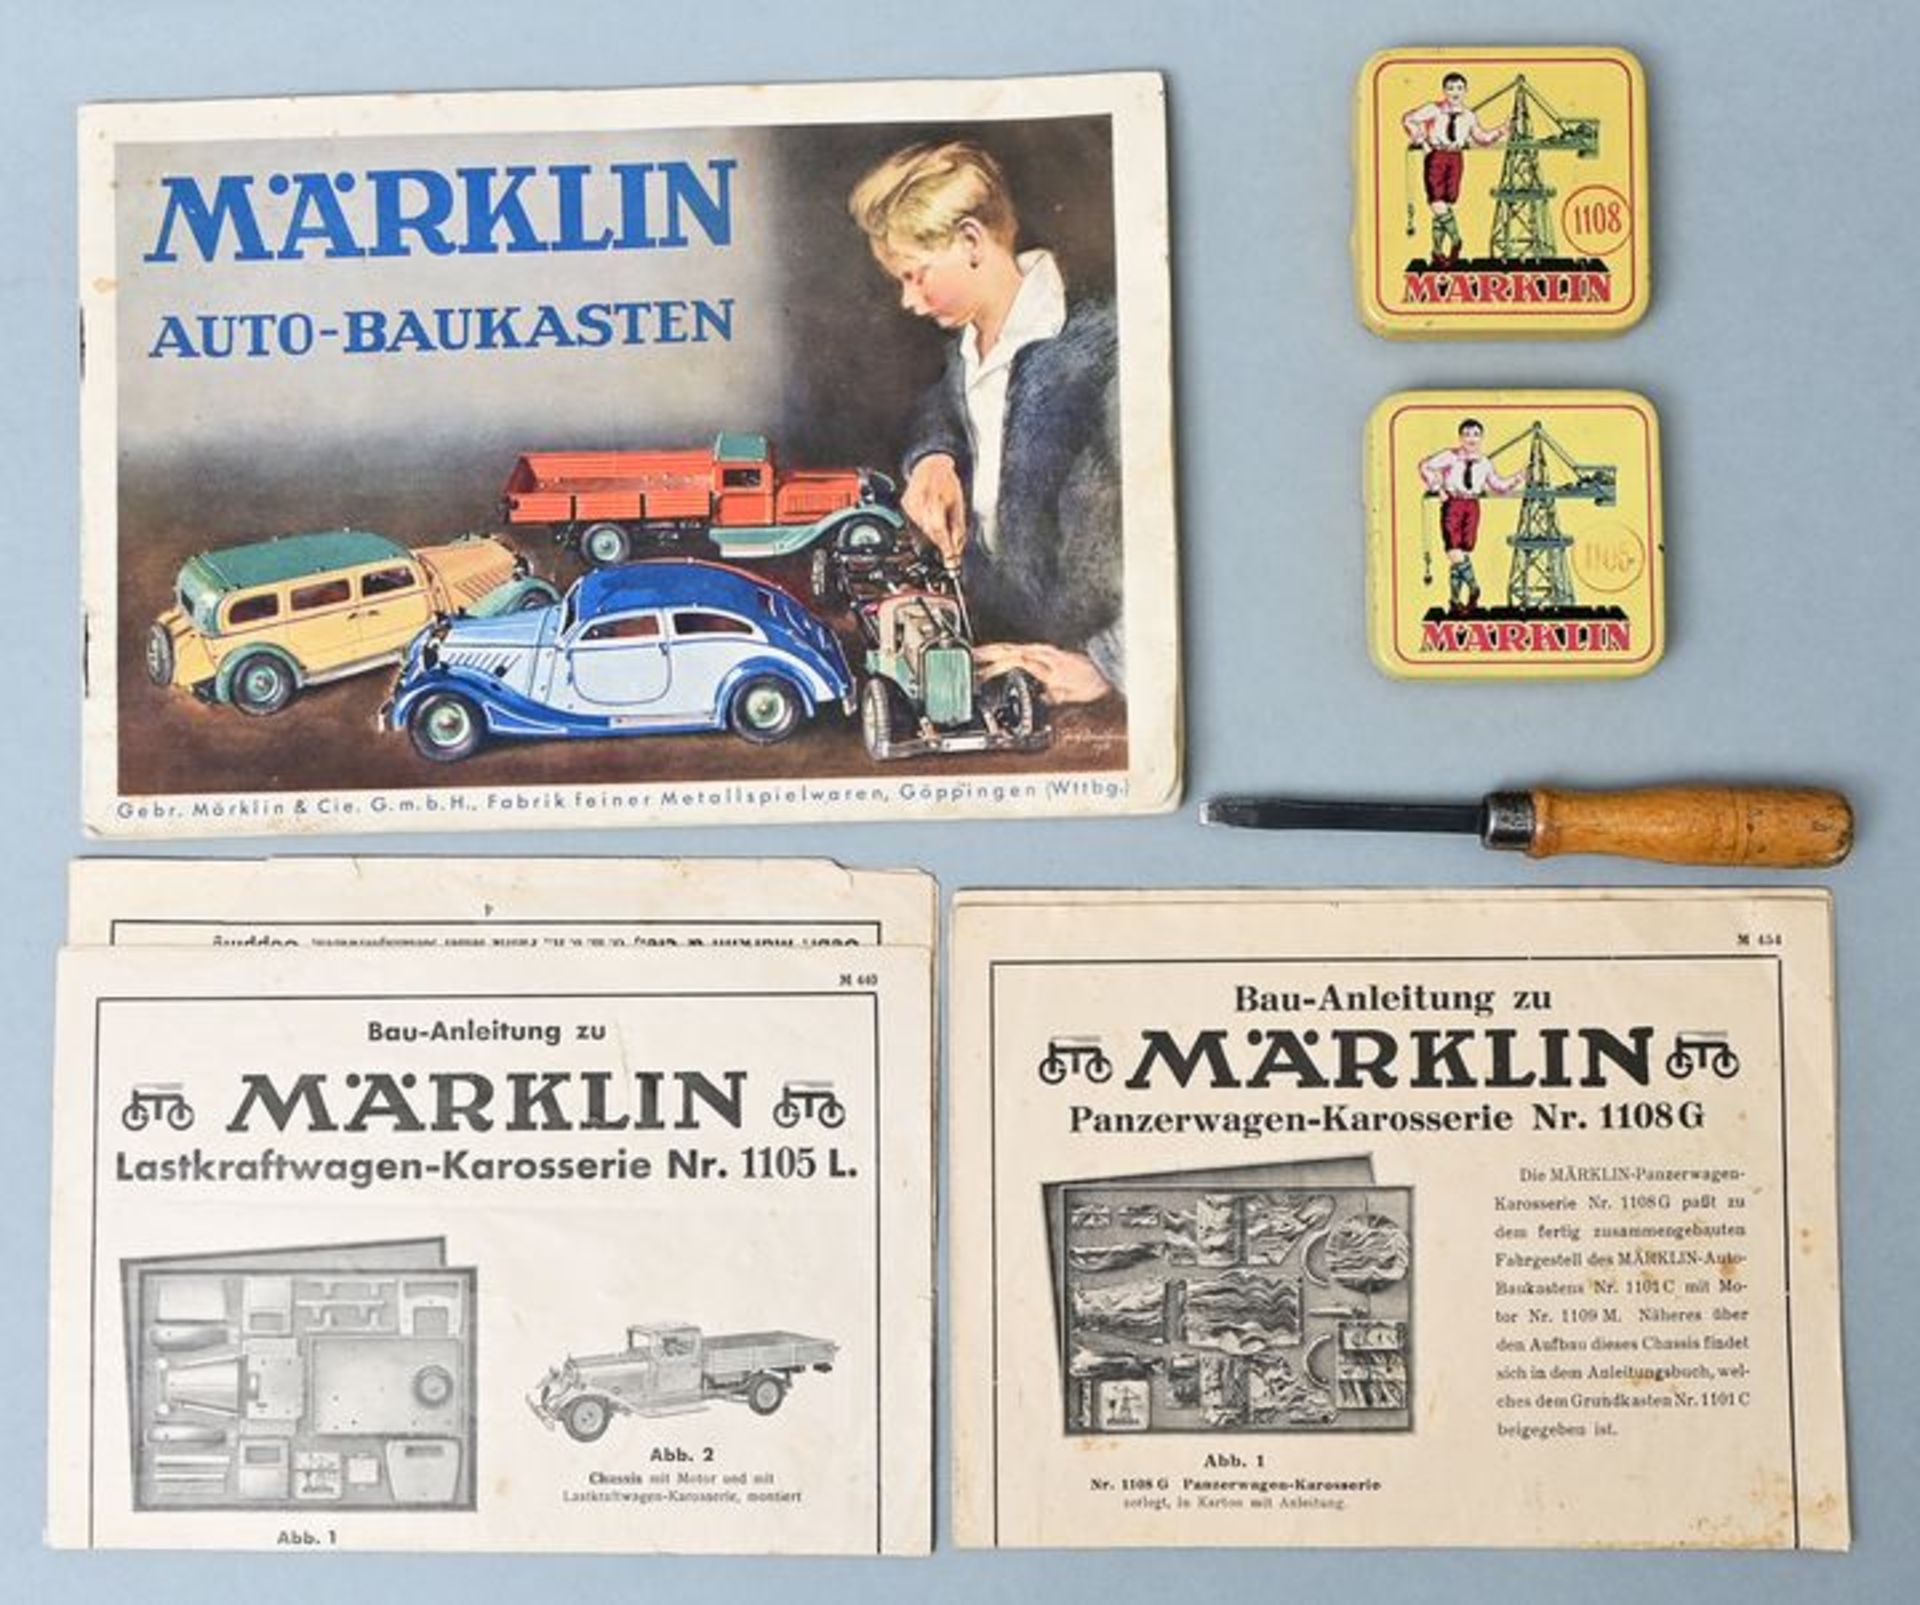 Märklin, Lastkraftwagen-Karosserie mit Panzerwagenaufsatz / Tin toys - Image 3 of 3